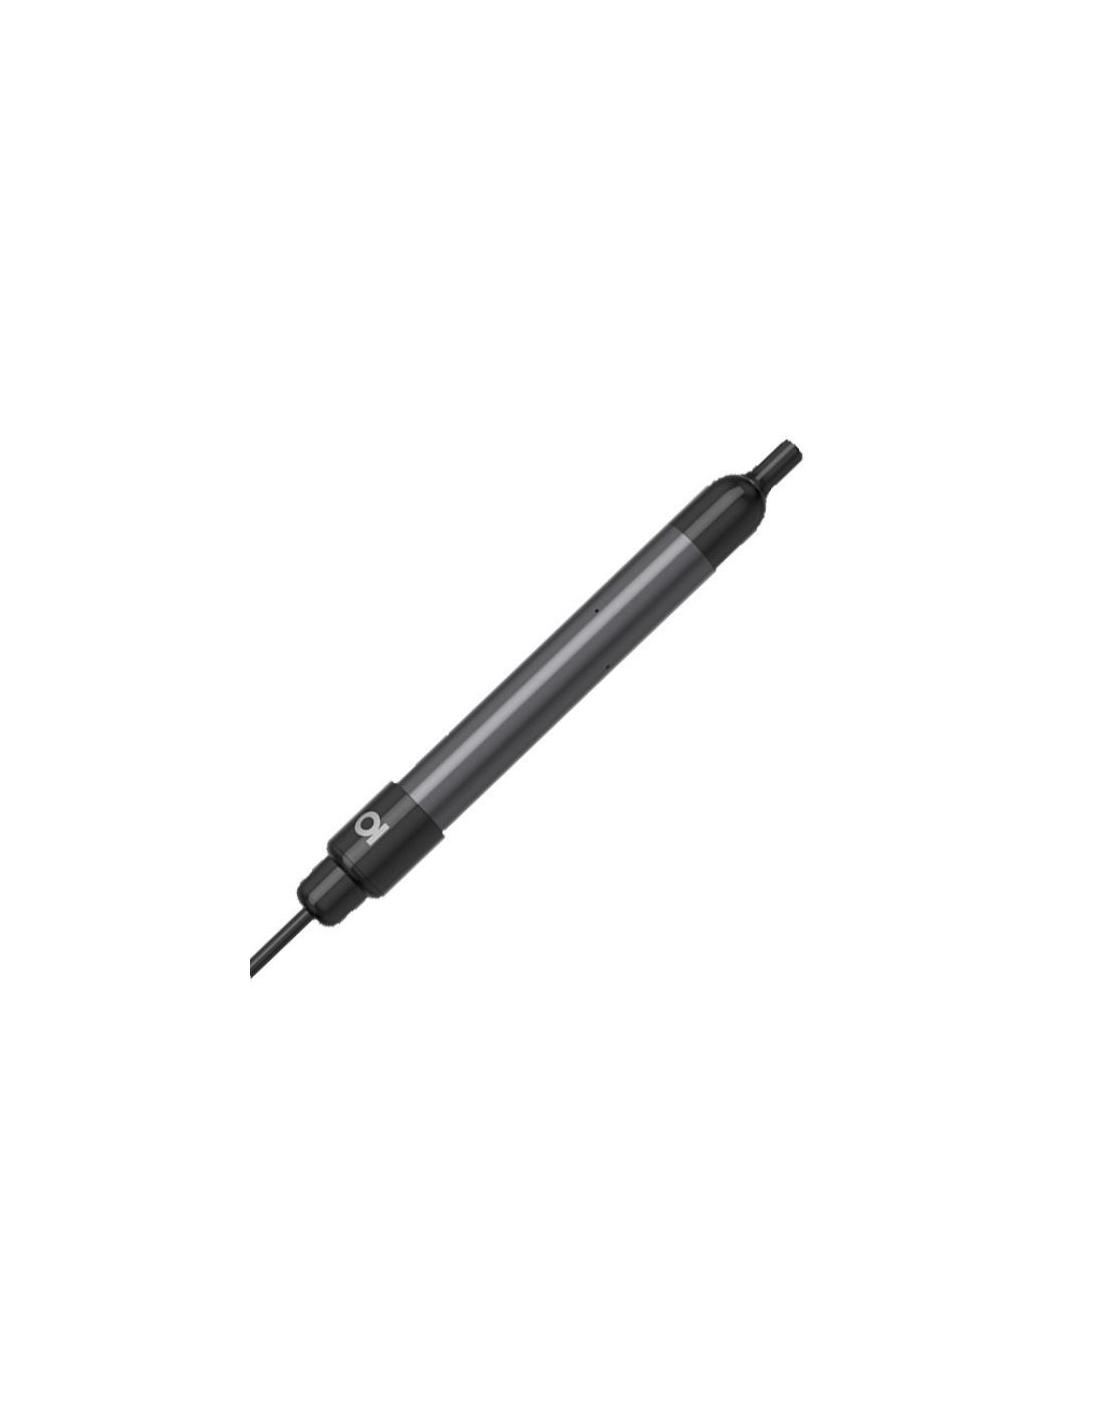 Vilter Pro Aspire Cavo Ricarica Vape Pen